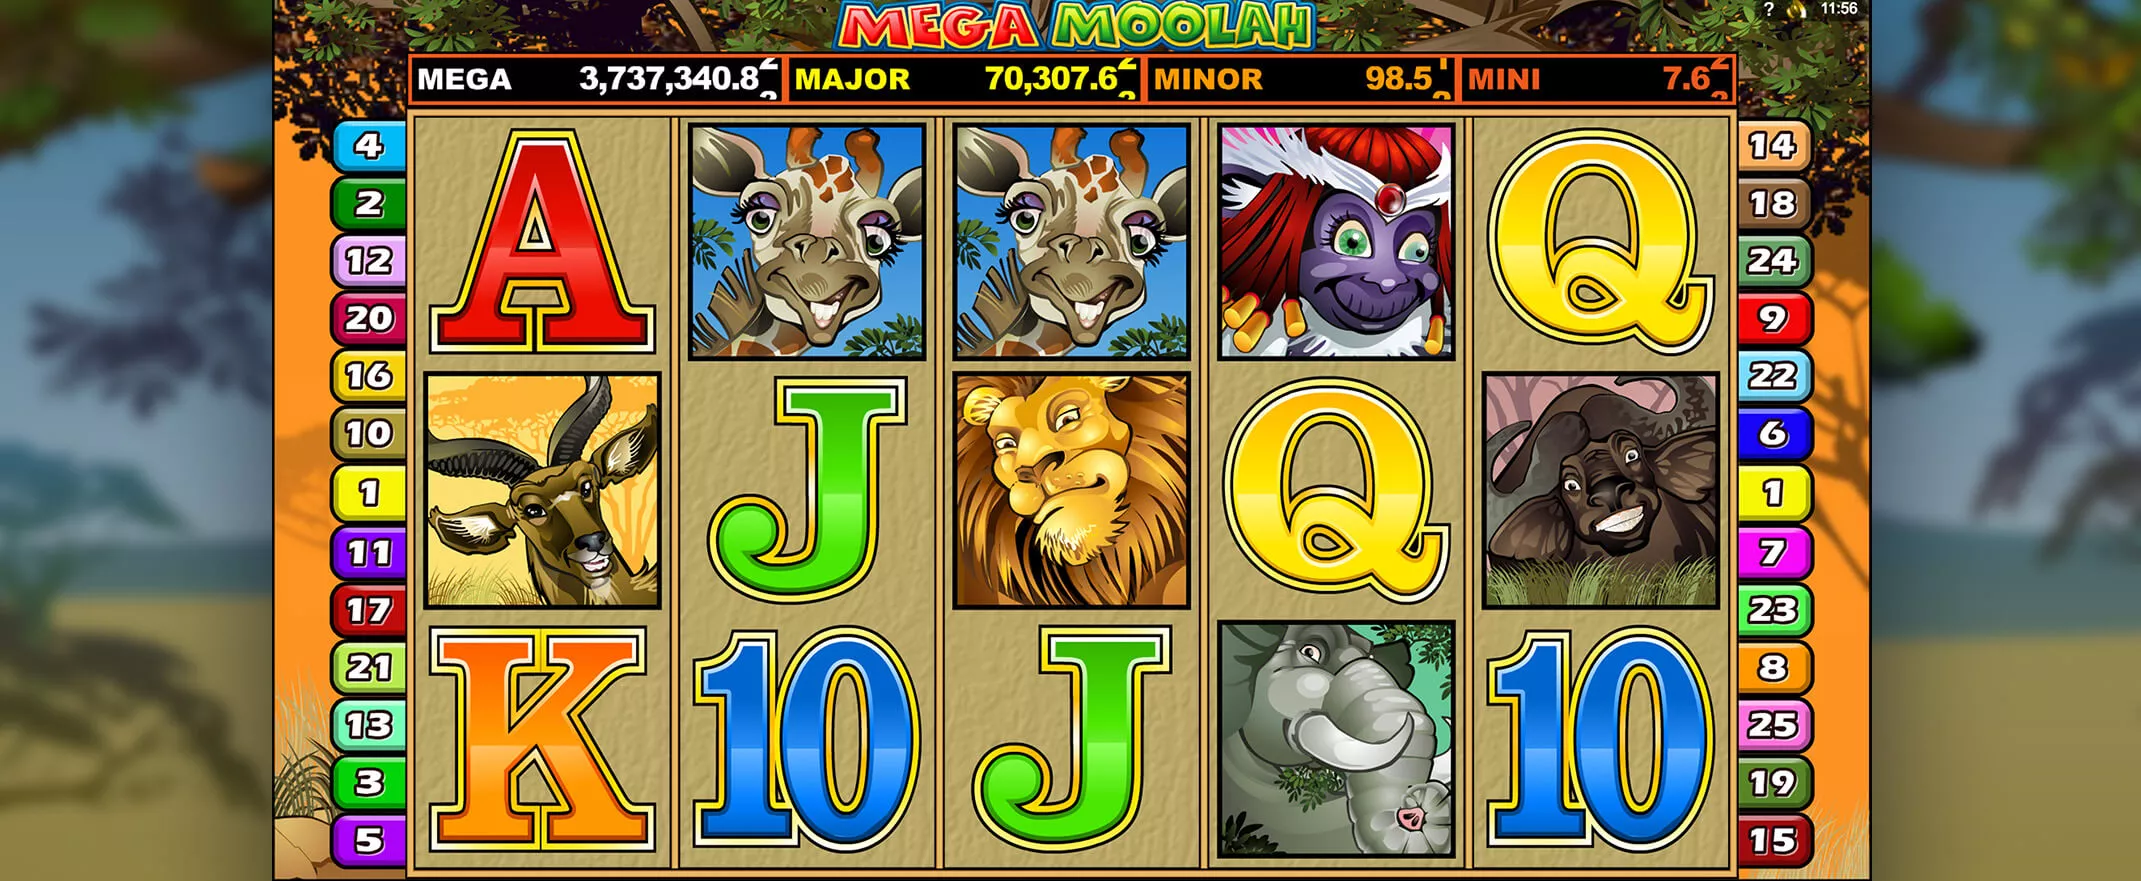 Mega Moolah jackpot slot from Microgaming